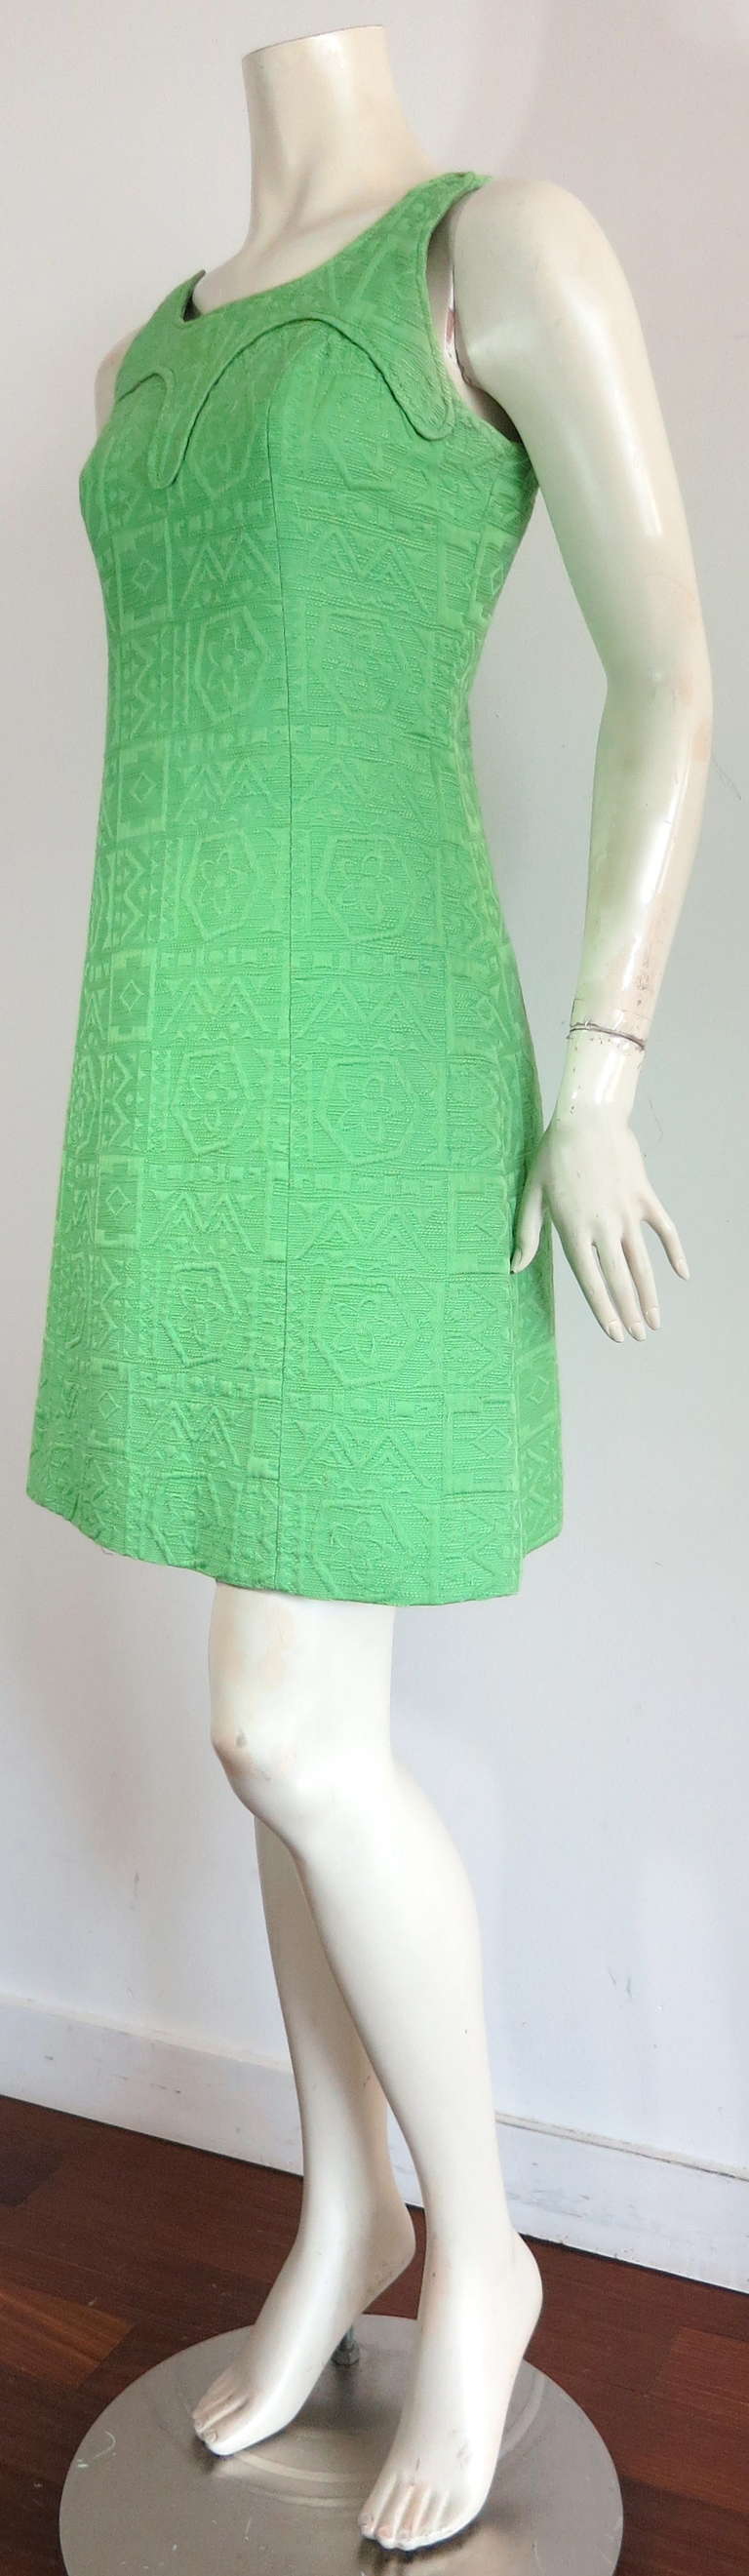 Men's 1960's LOUIS FERAUD Mod sun dress For Sale